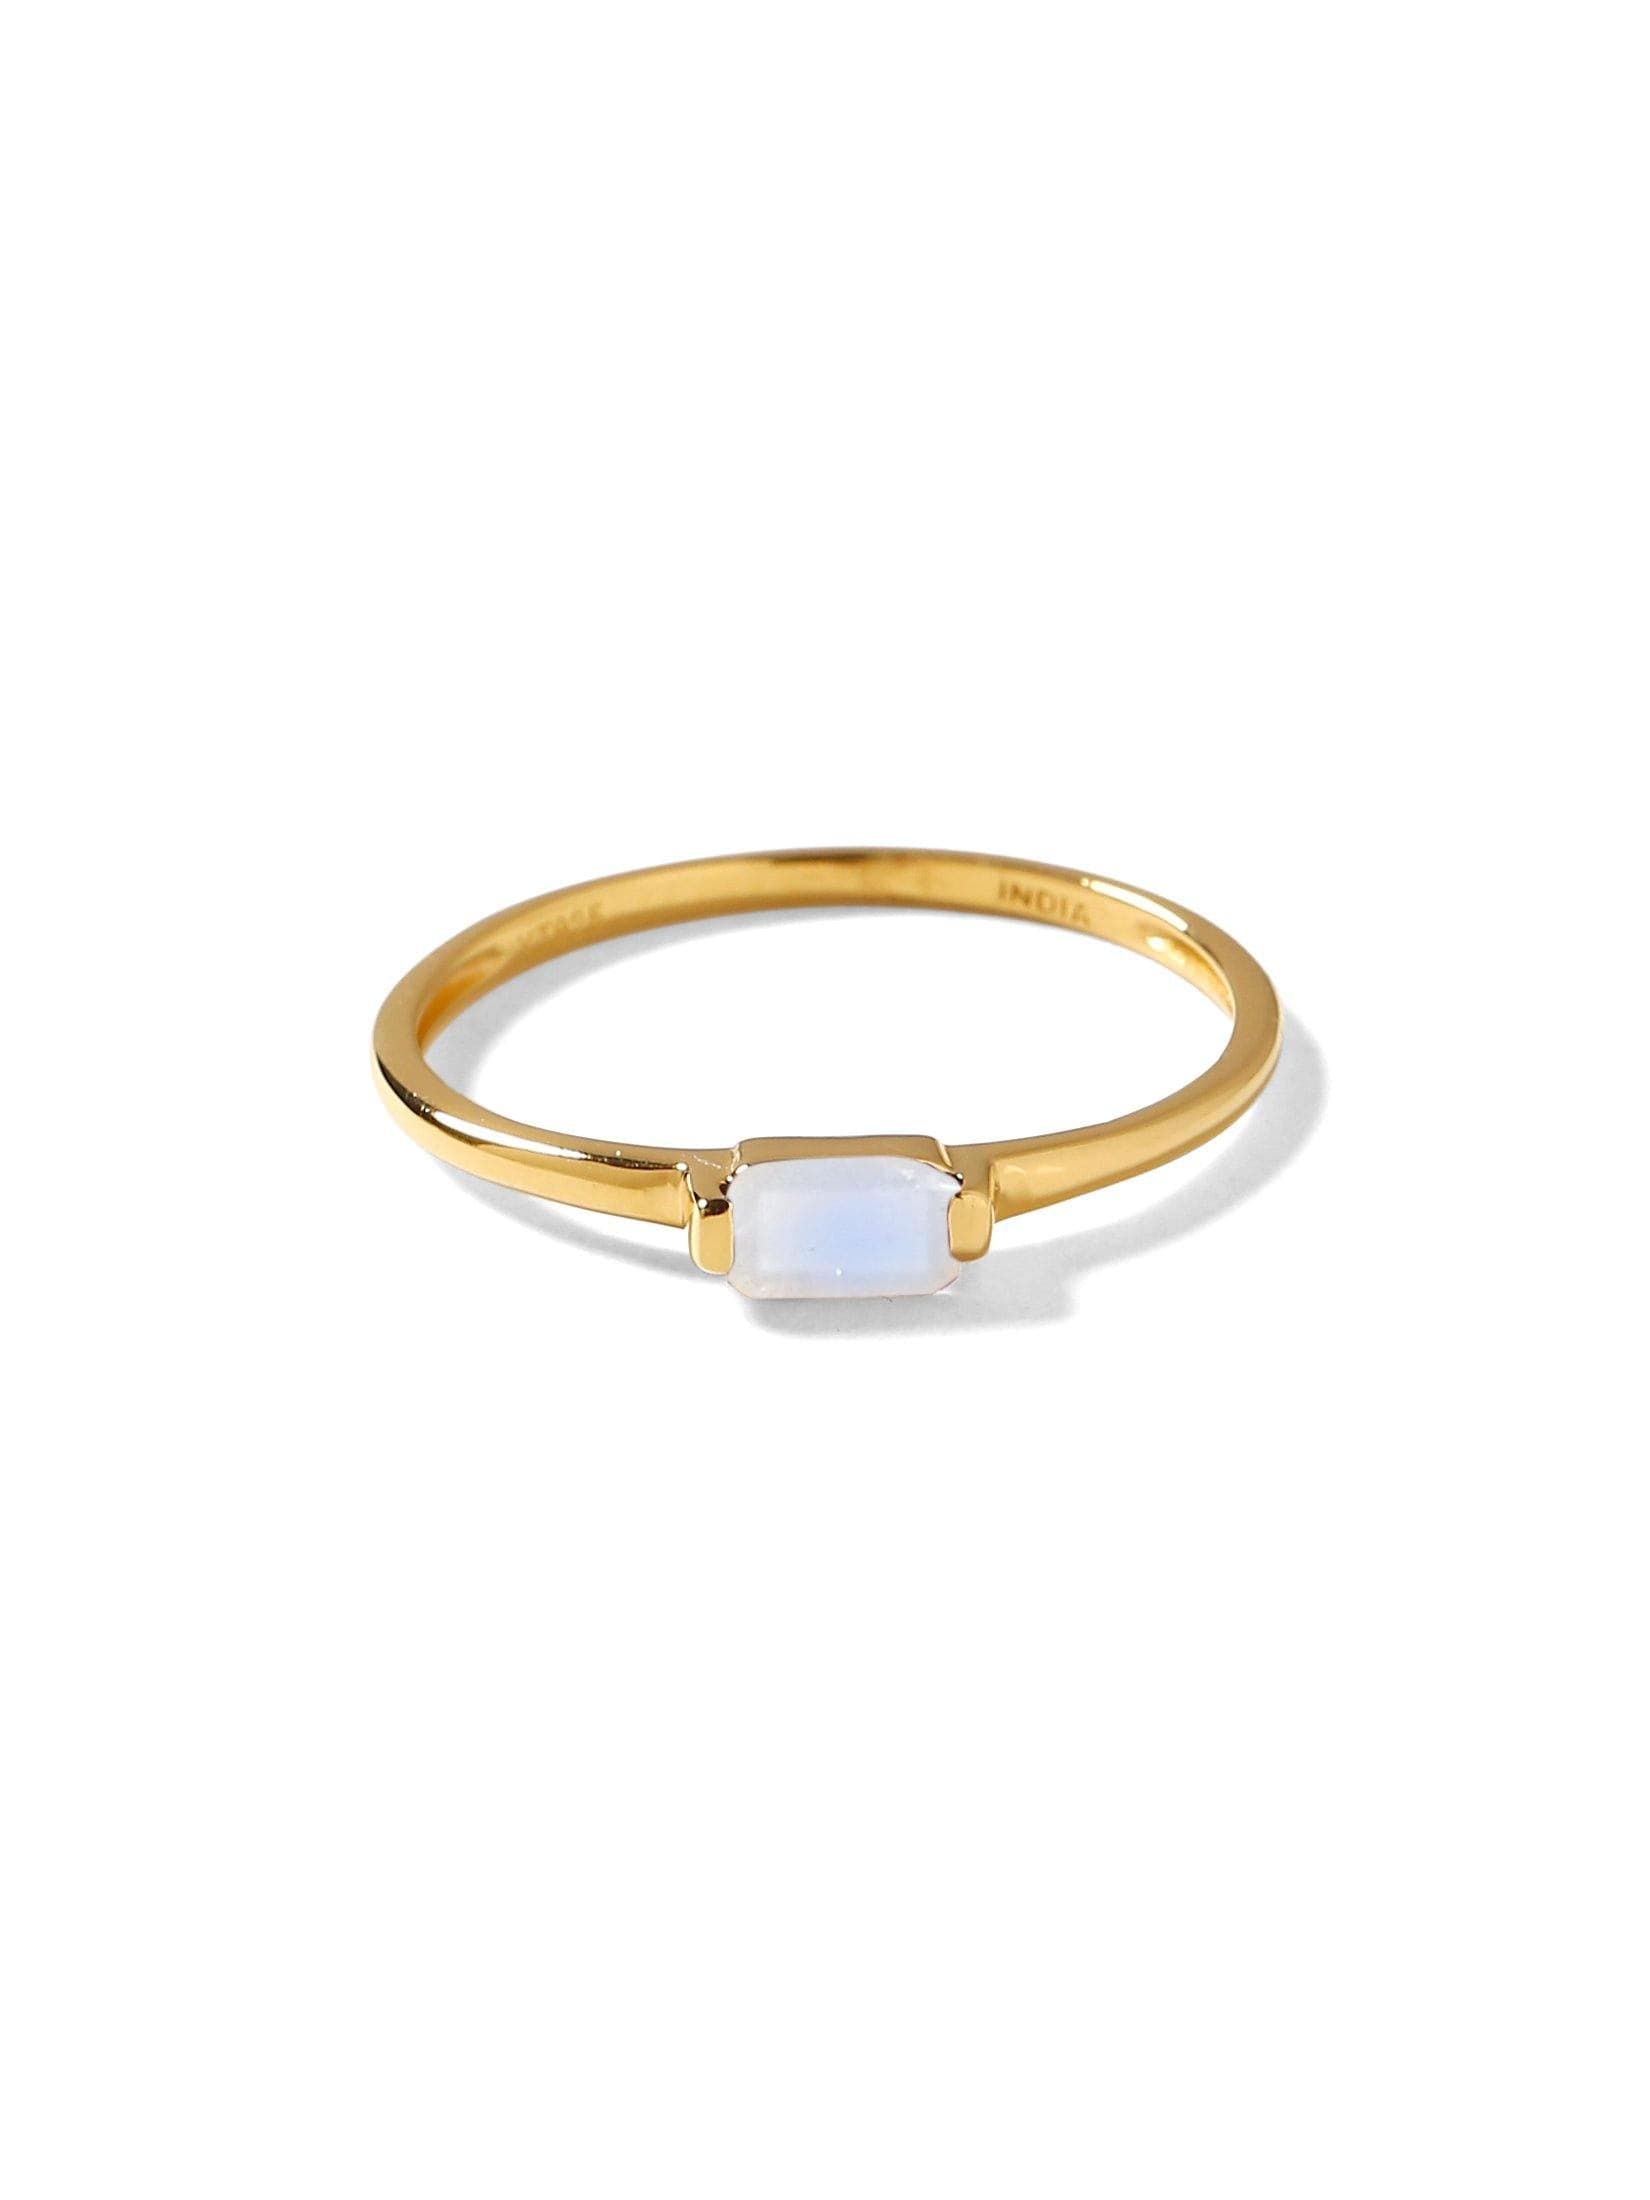 0.26 Ct Rainbow Moonstone Solid 10k Yellow Gold Ring Jewelry - YoTreasure